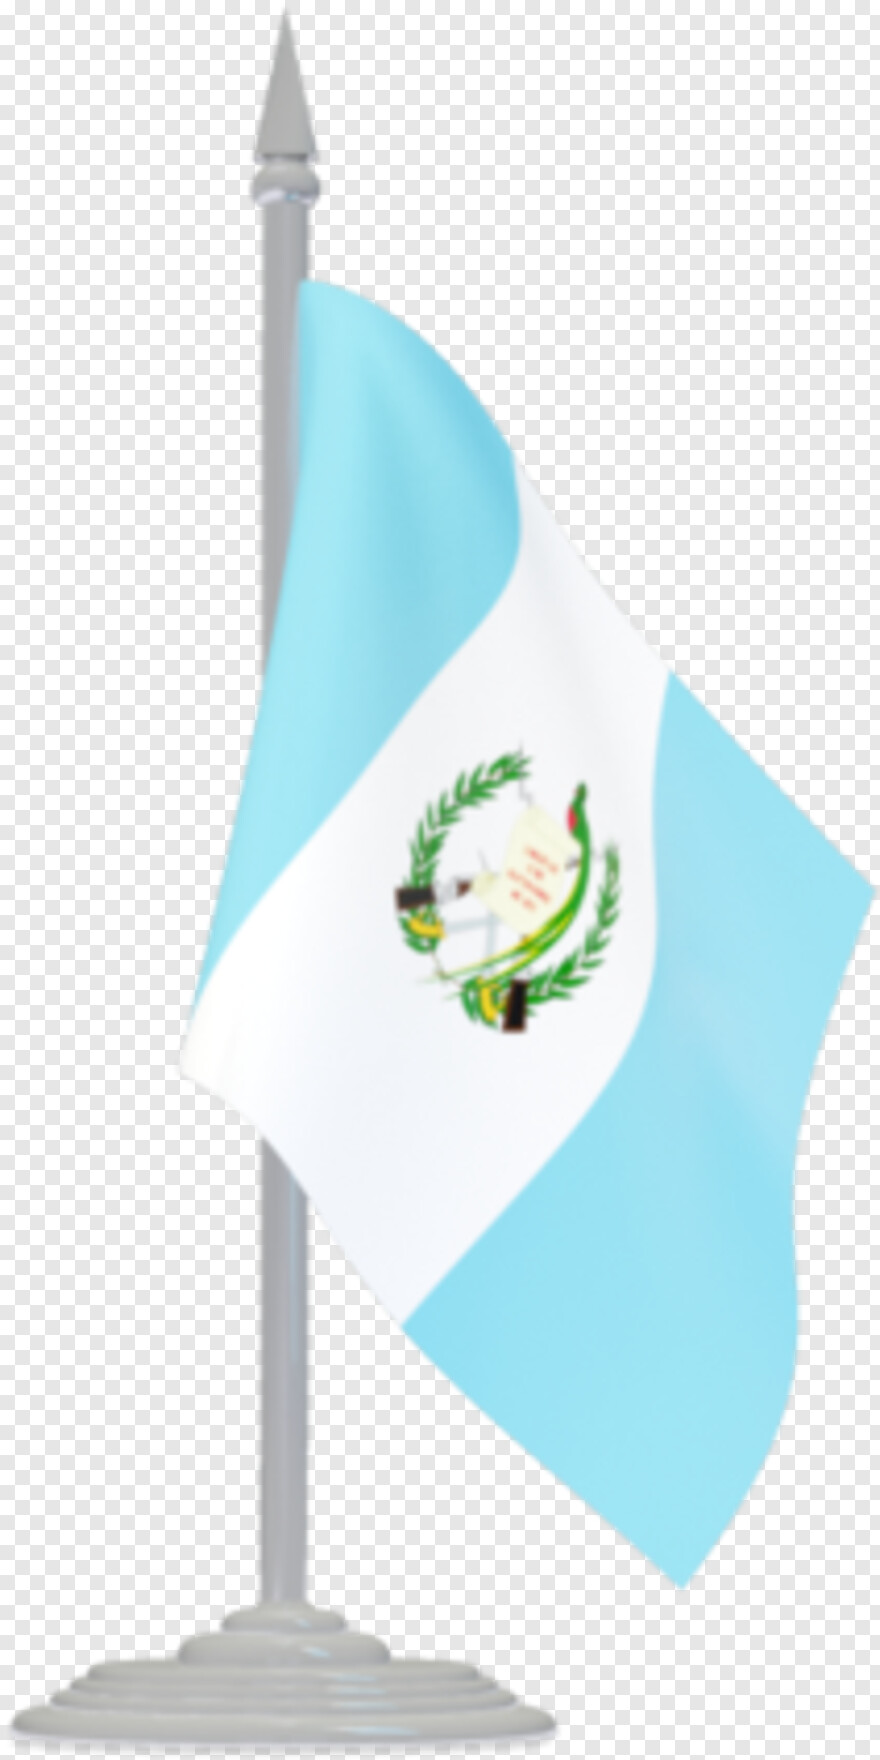 Guatemala Flag, Pirate Flag, American Flag Clip Art, White Flag ...